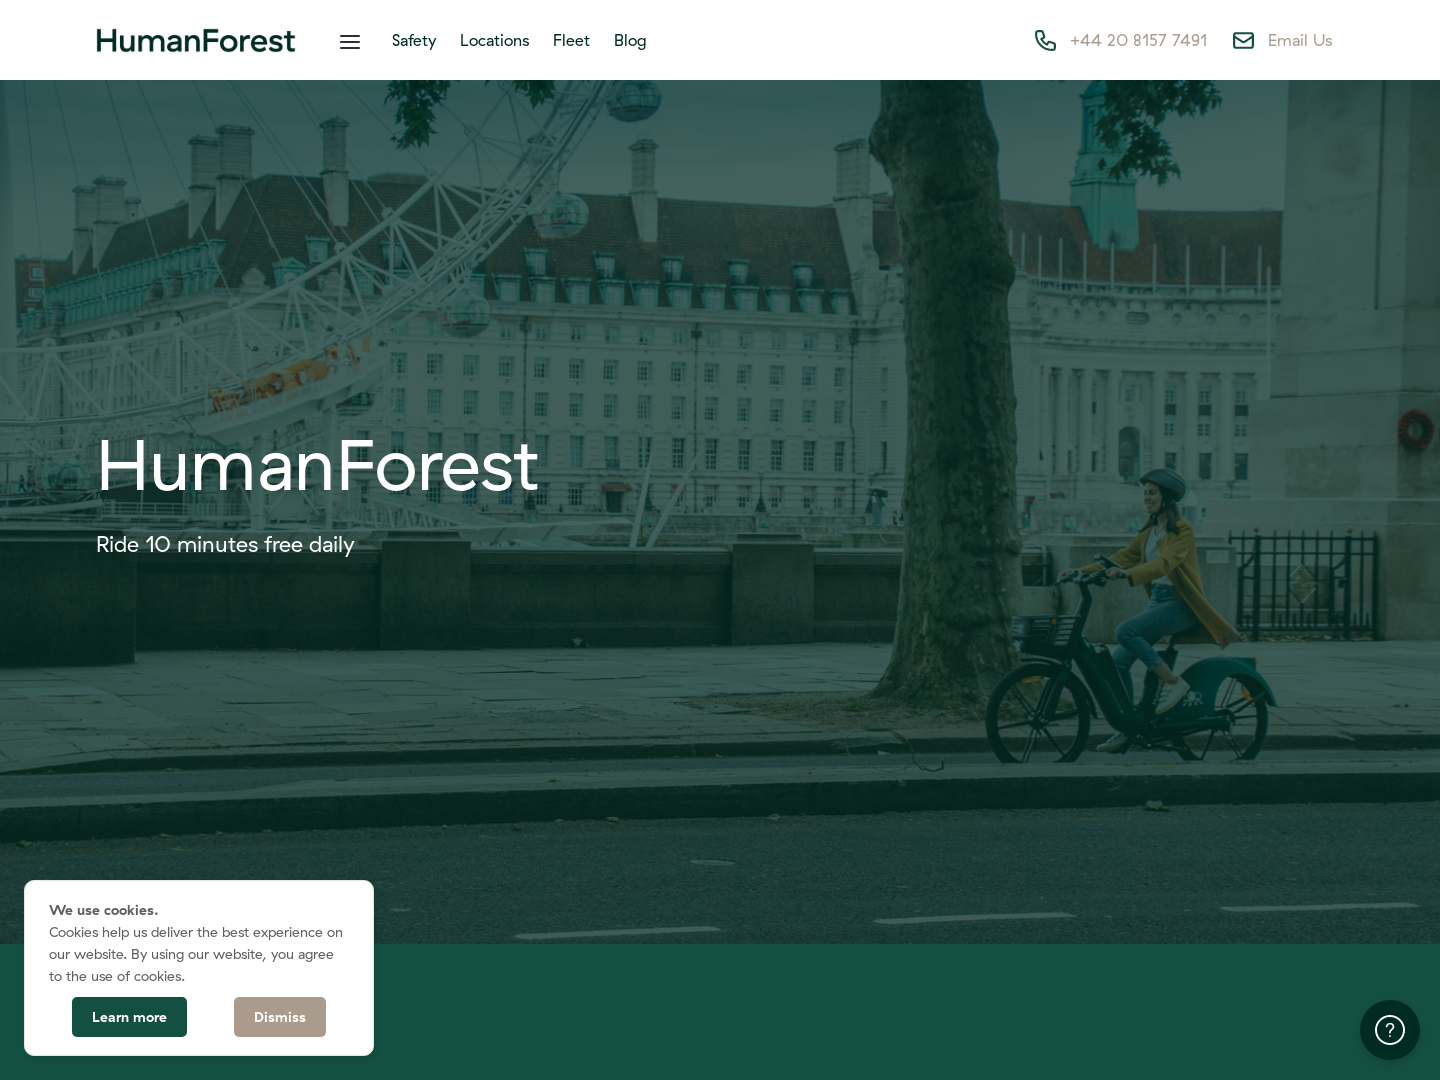 "HumanForest Raises £5m to Expand European E-Bike Fleet"